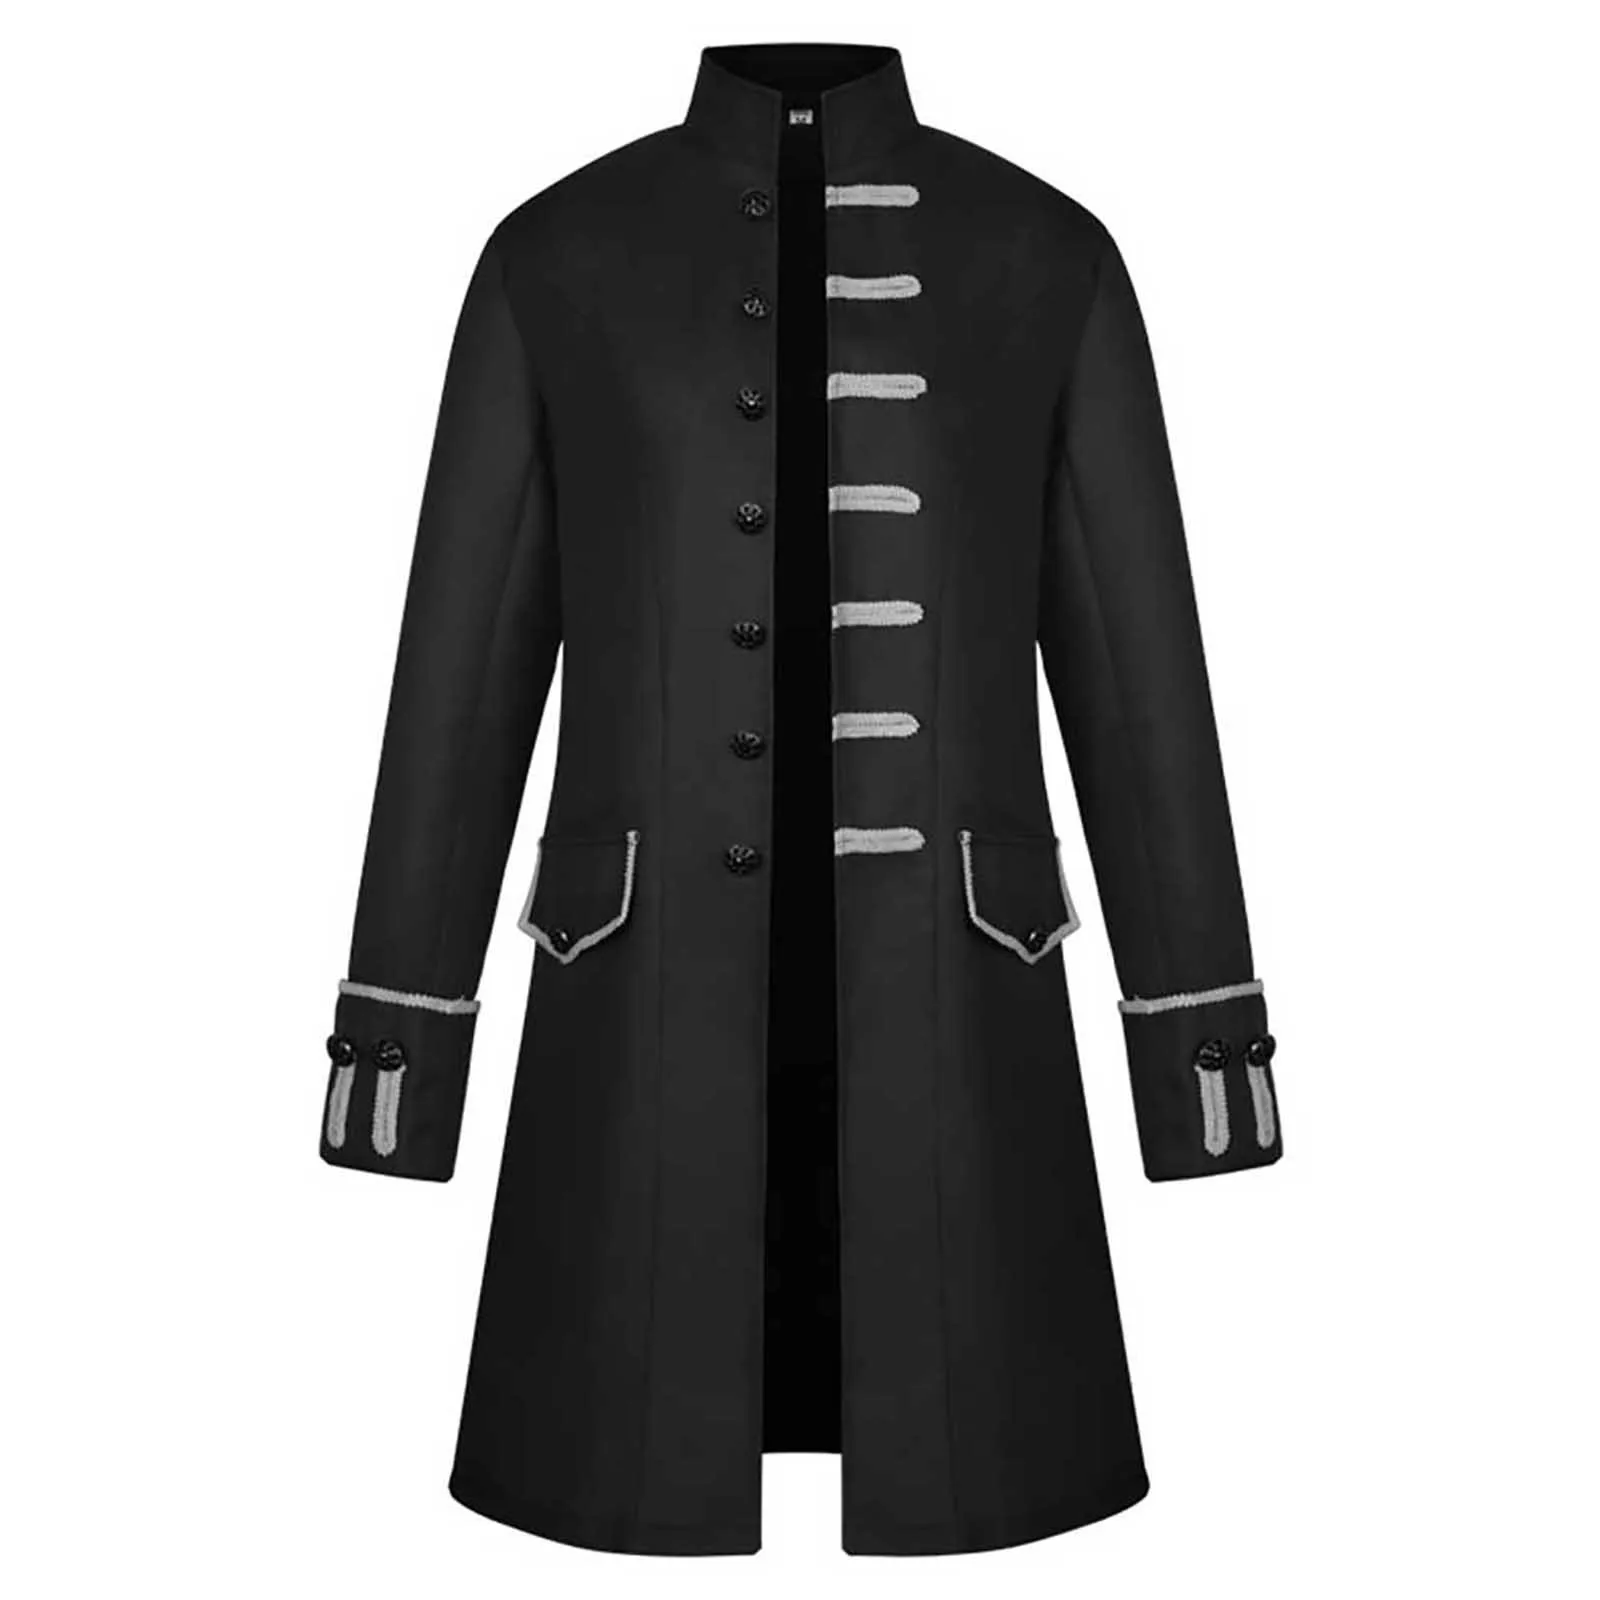 Halloween Men Winter Warm Vintage Tailcoat Jackets Gothic Victorian Medieval Cosplay Costume Overcoat Outwear Tuxedo Coats